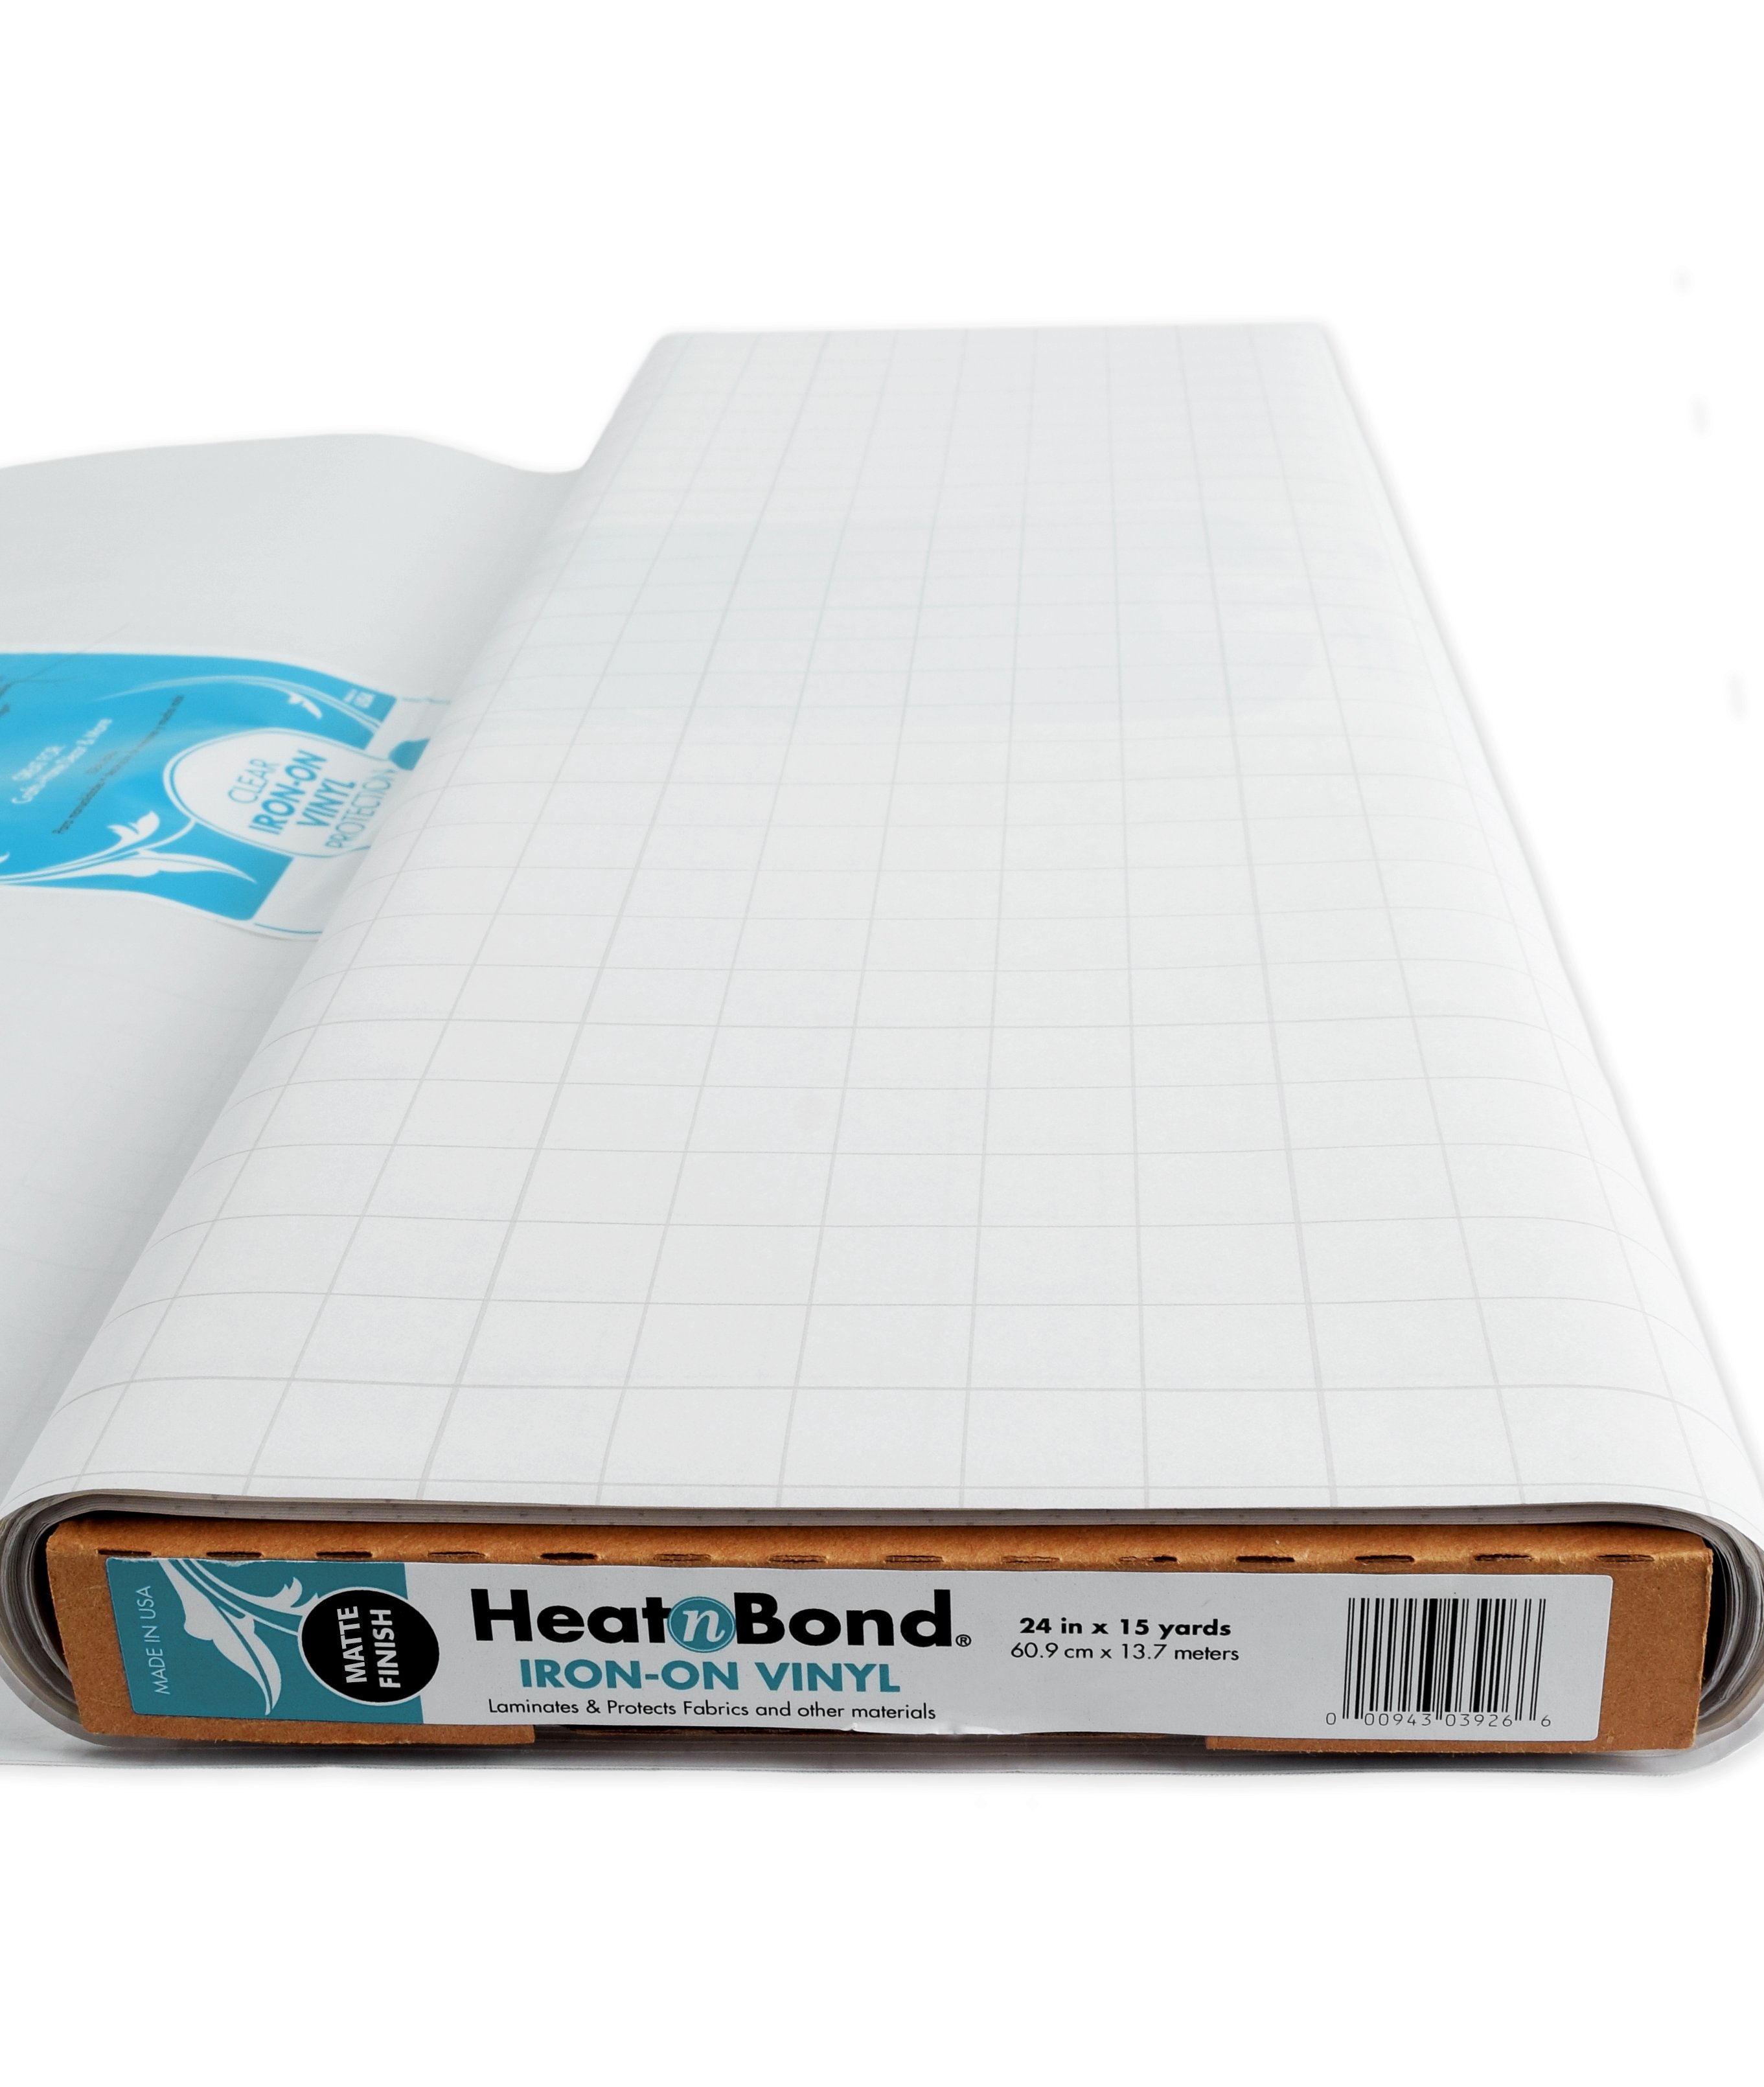 Therm O Web HeatnBond Iron-On Vinyl Stabilizer - Gloss